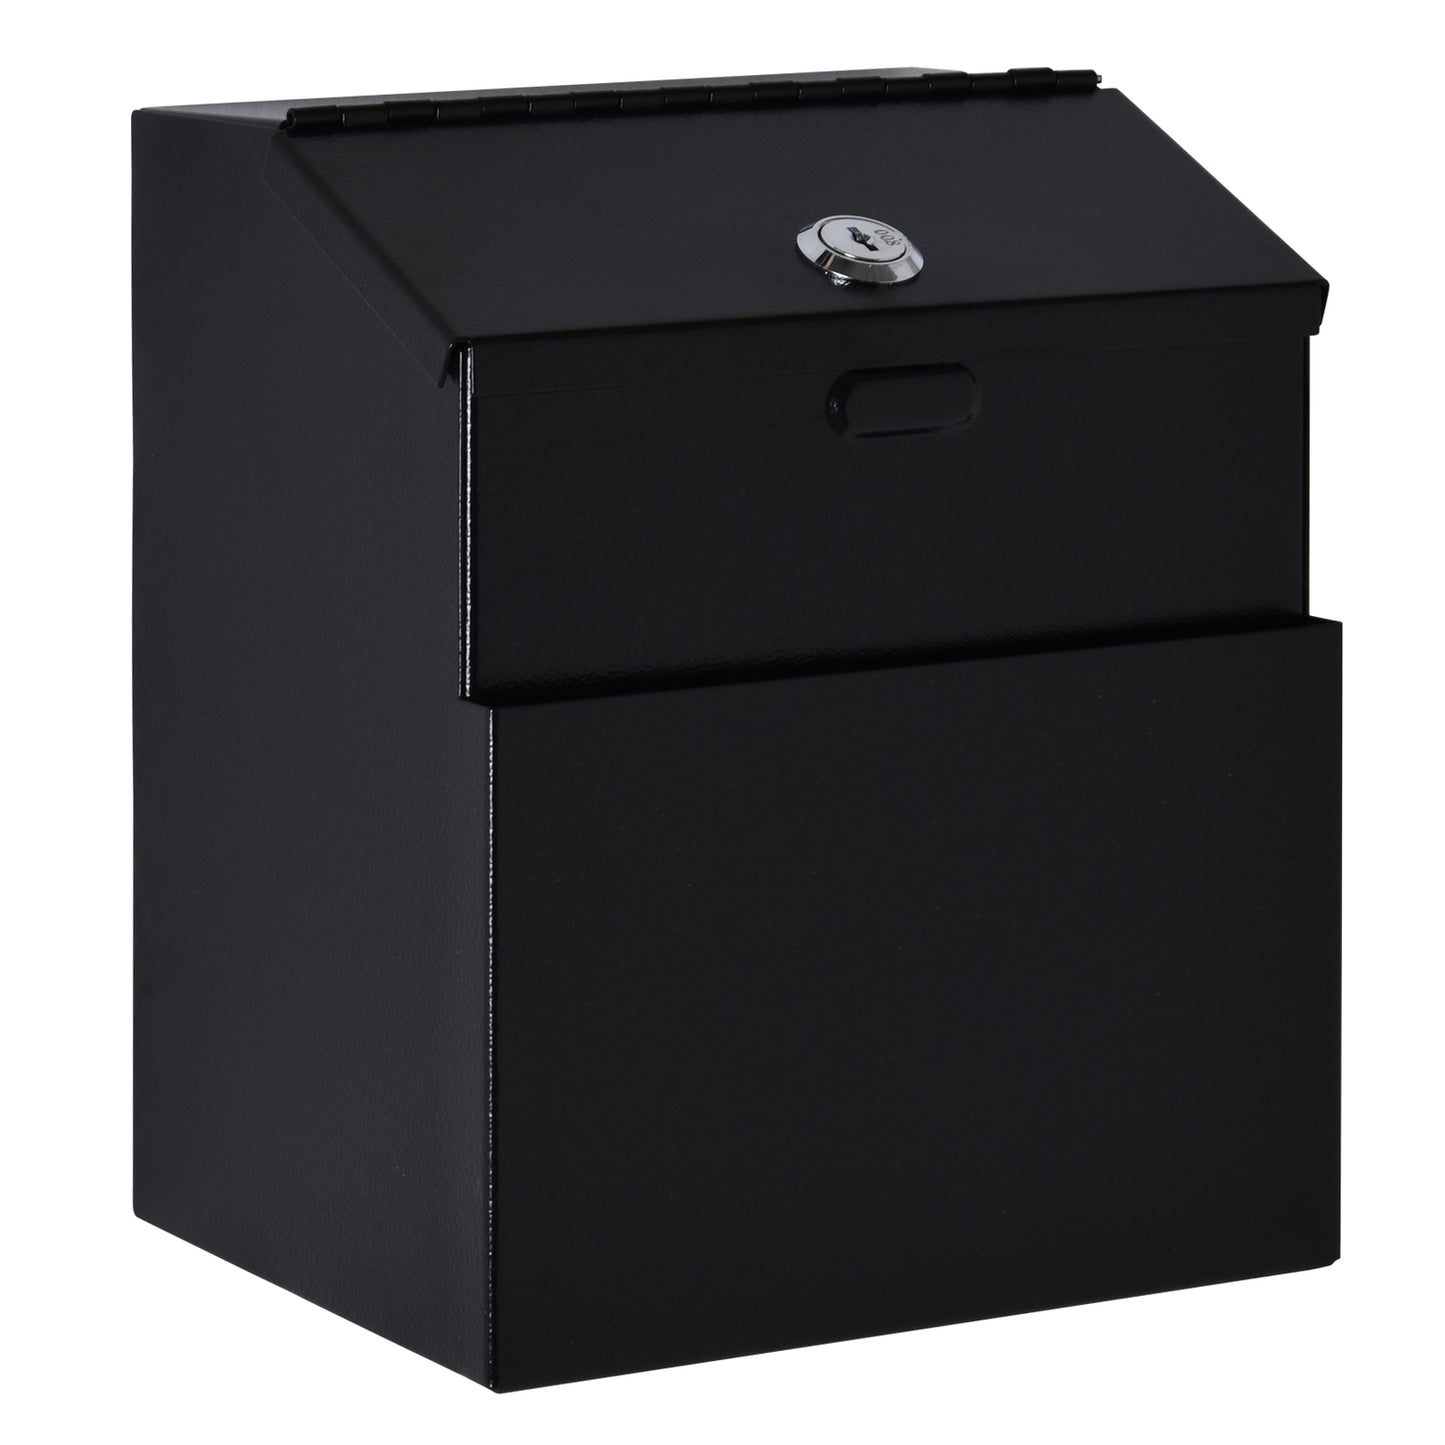 HOMCOM Steel Lockable Letter Box w/ Compartments Black